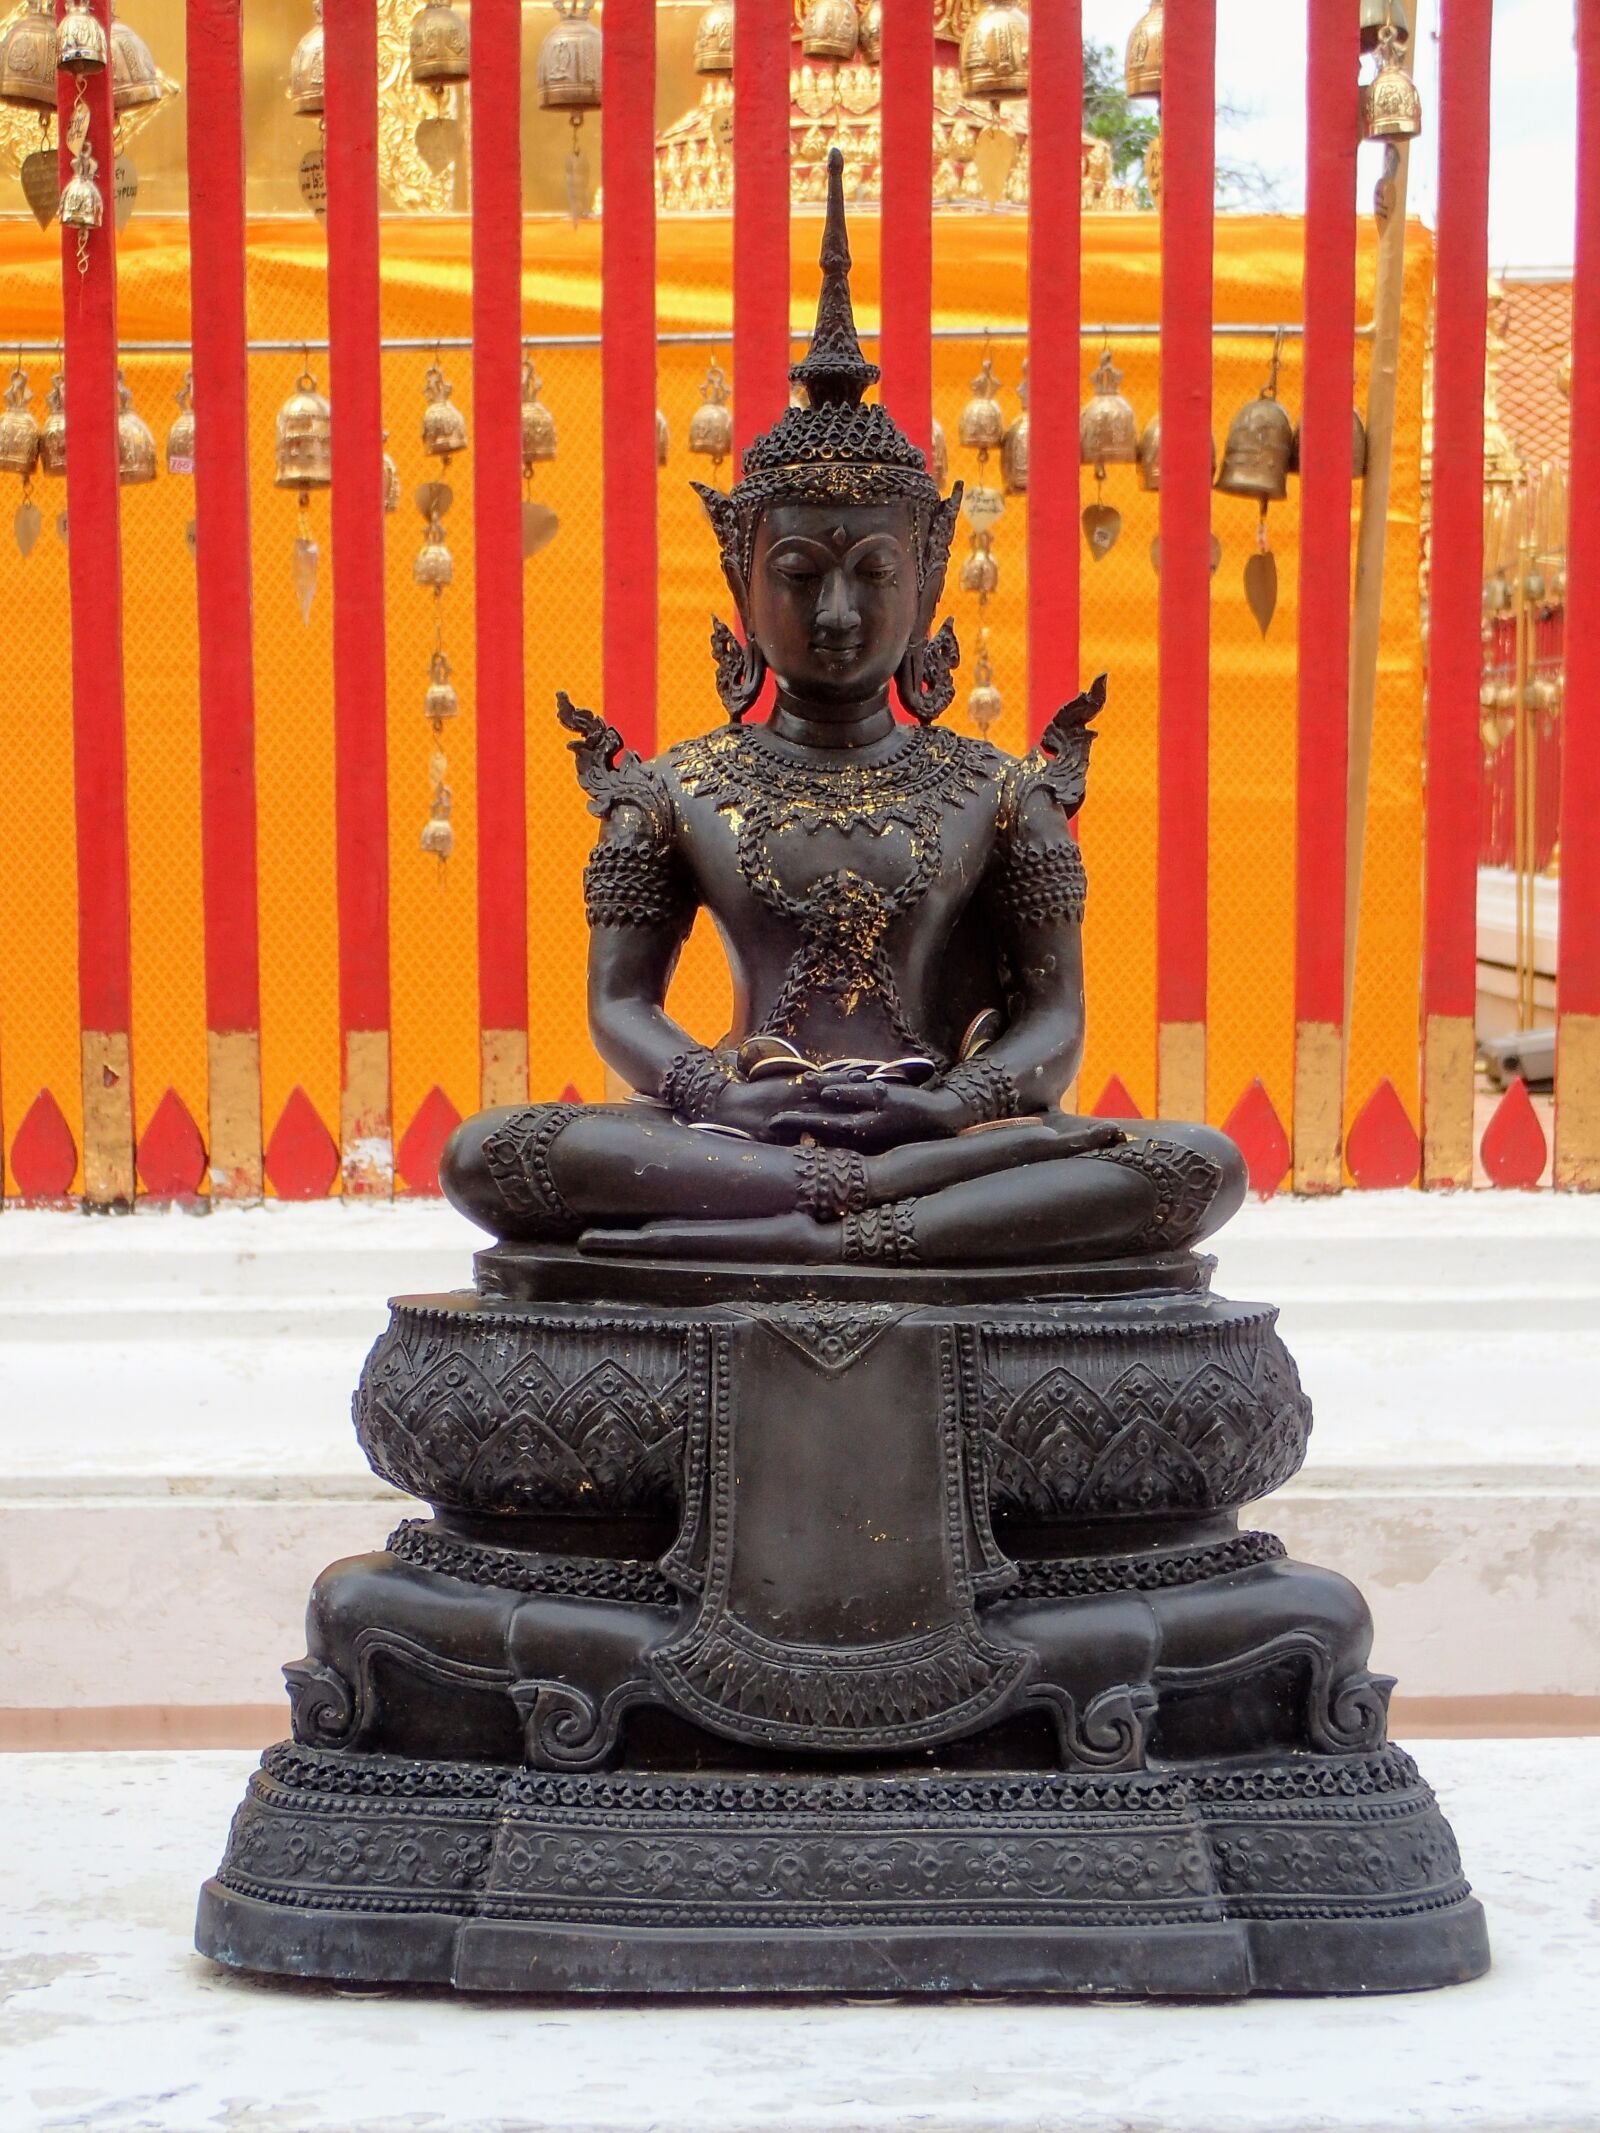 Olympus TG-4 sample photo. Buddha, statue, thailand photography